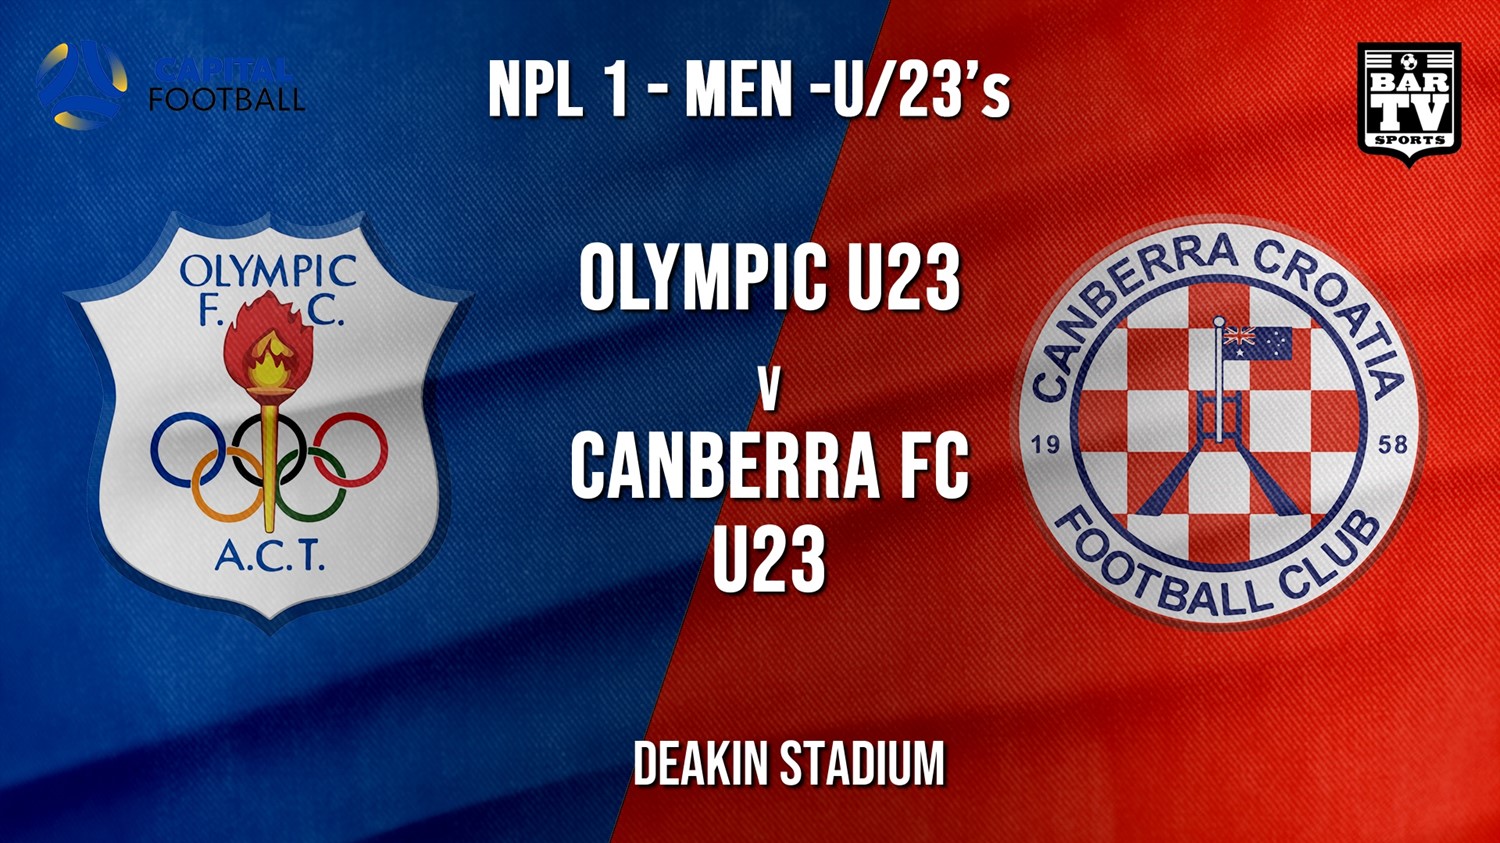 NPL1 Men - U23 - Capital Football  Series 1 - Canberra Olympic U23 v Canberra FC U23 Minigame Slate Image